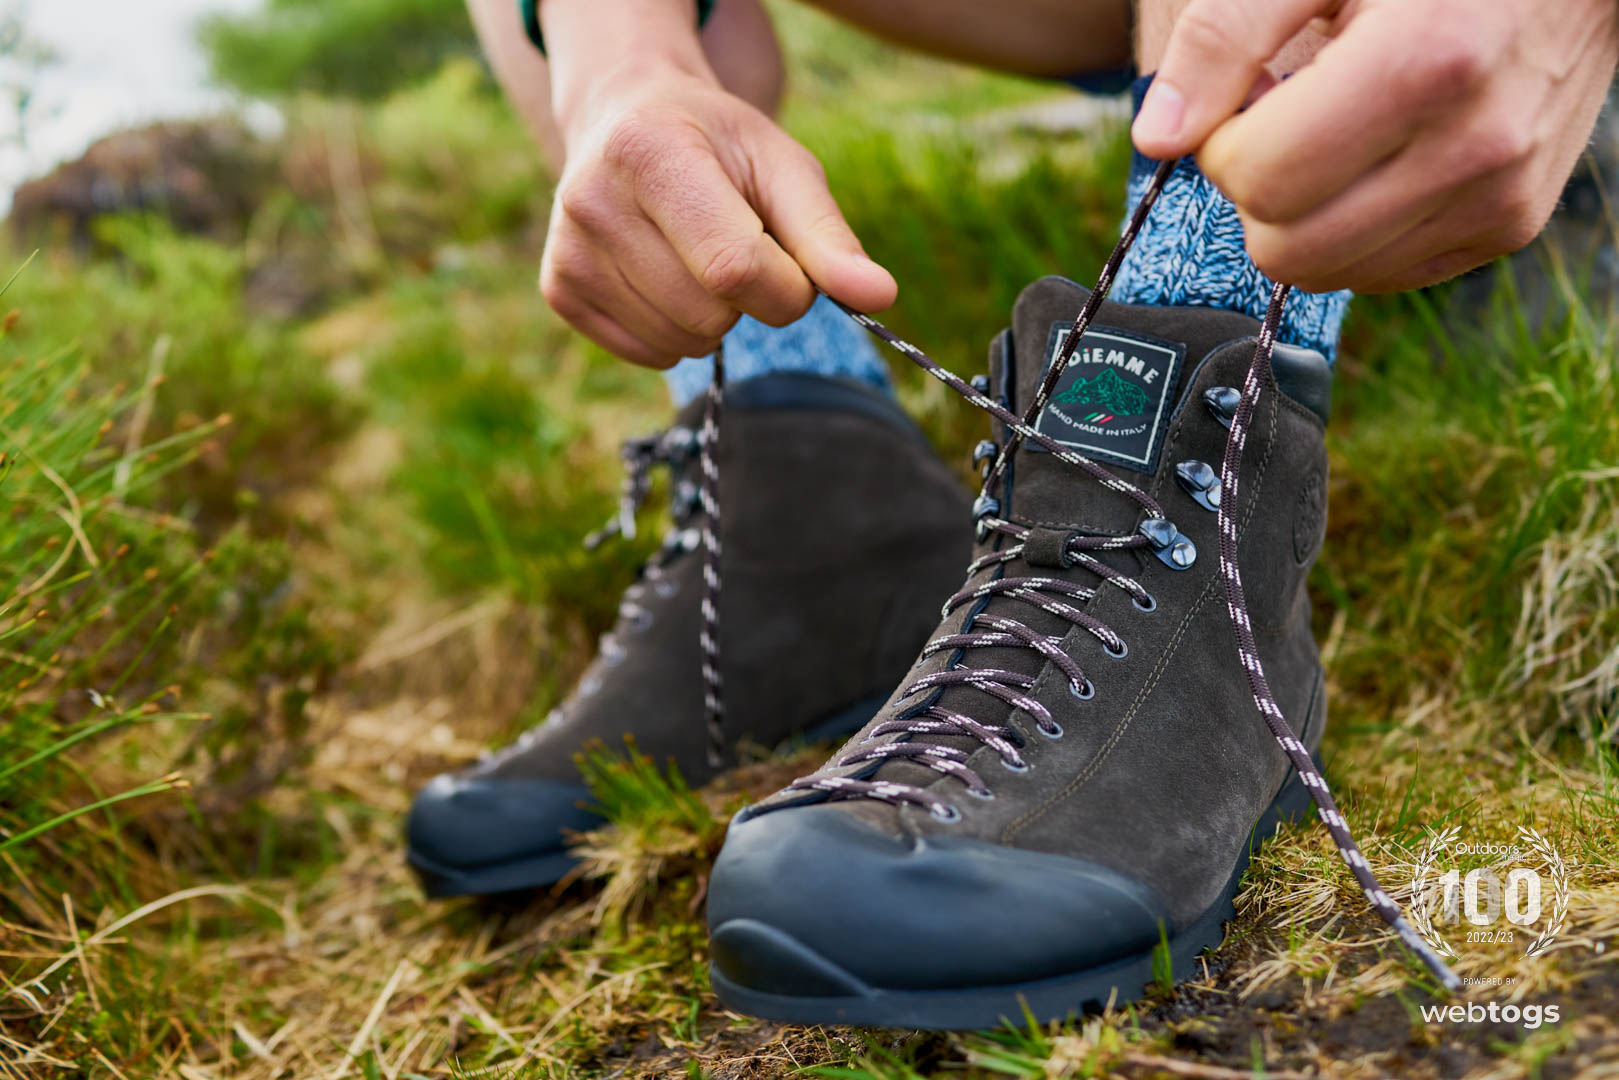 Brandercosse Capriolo Walking Boots | Review